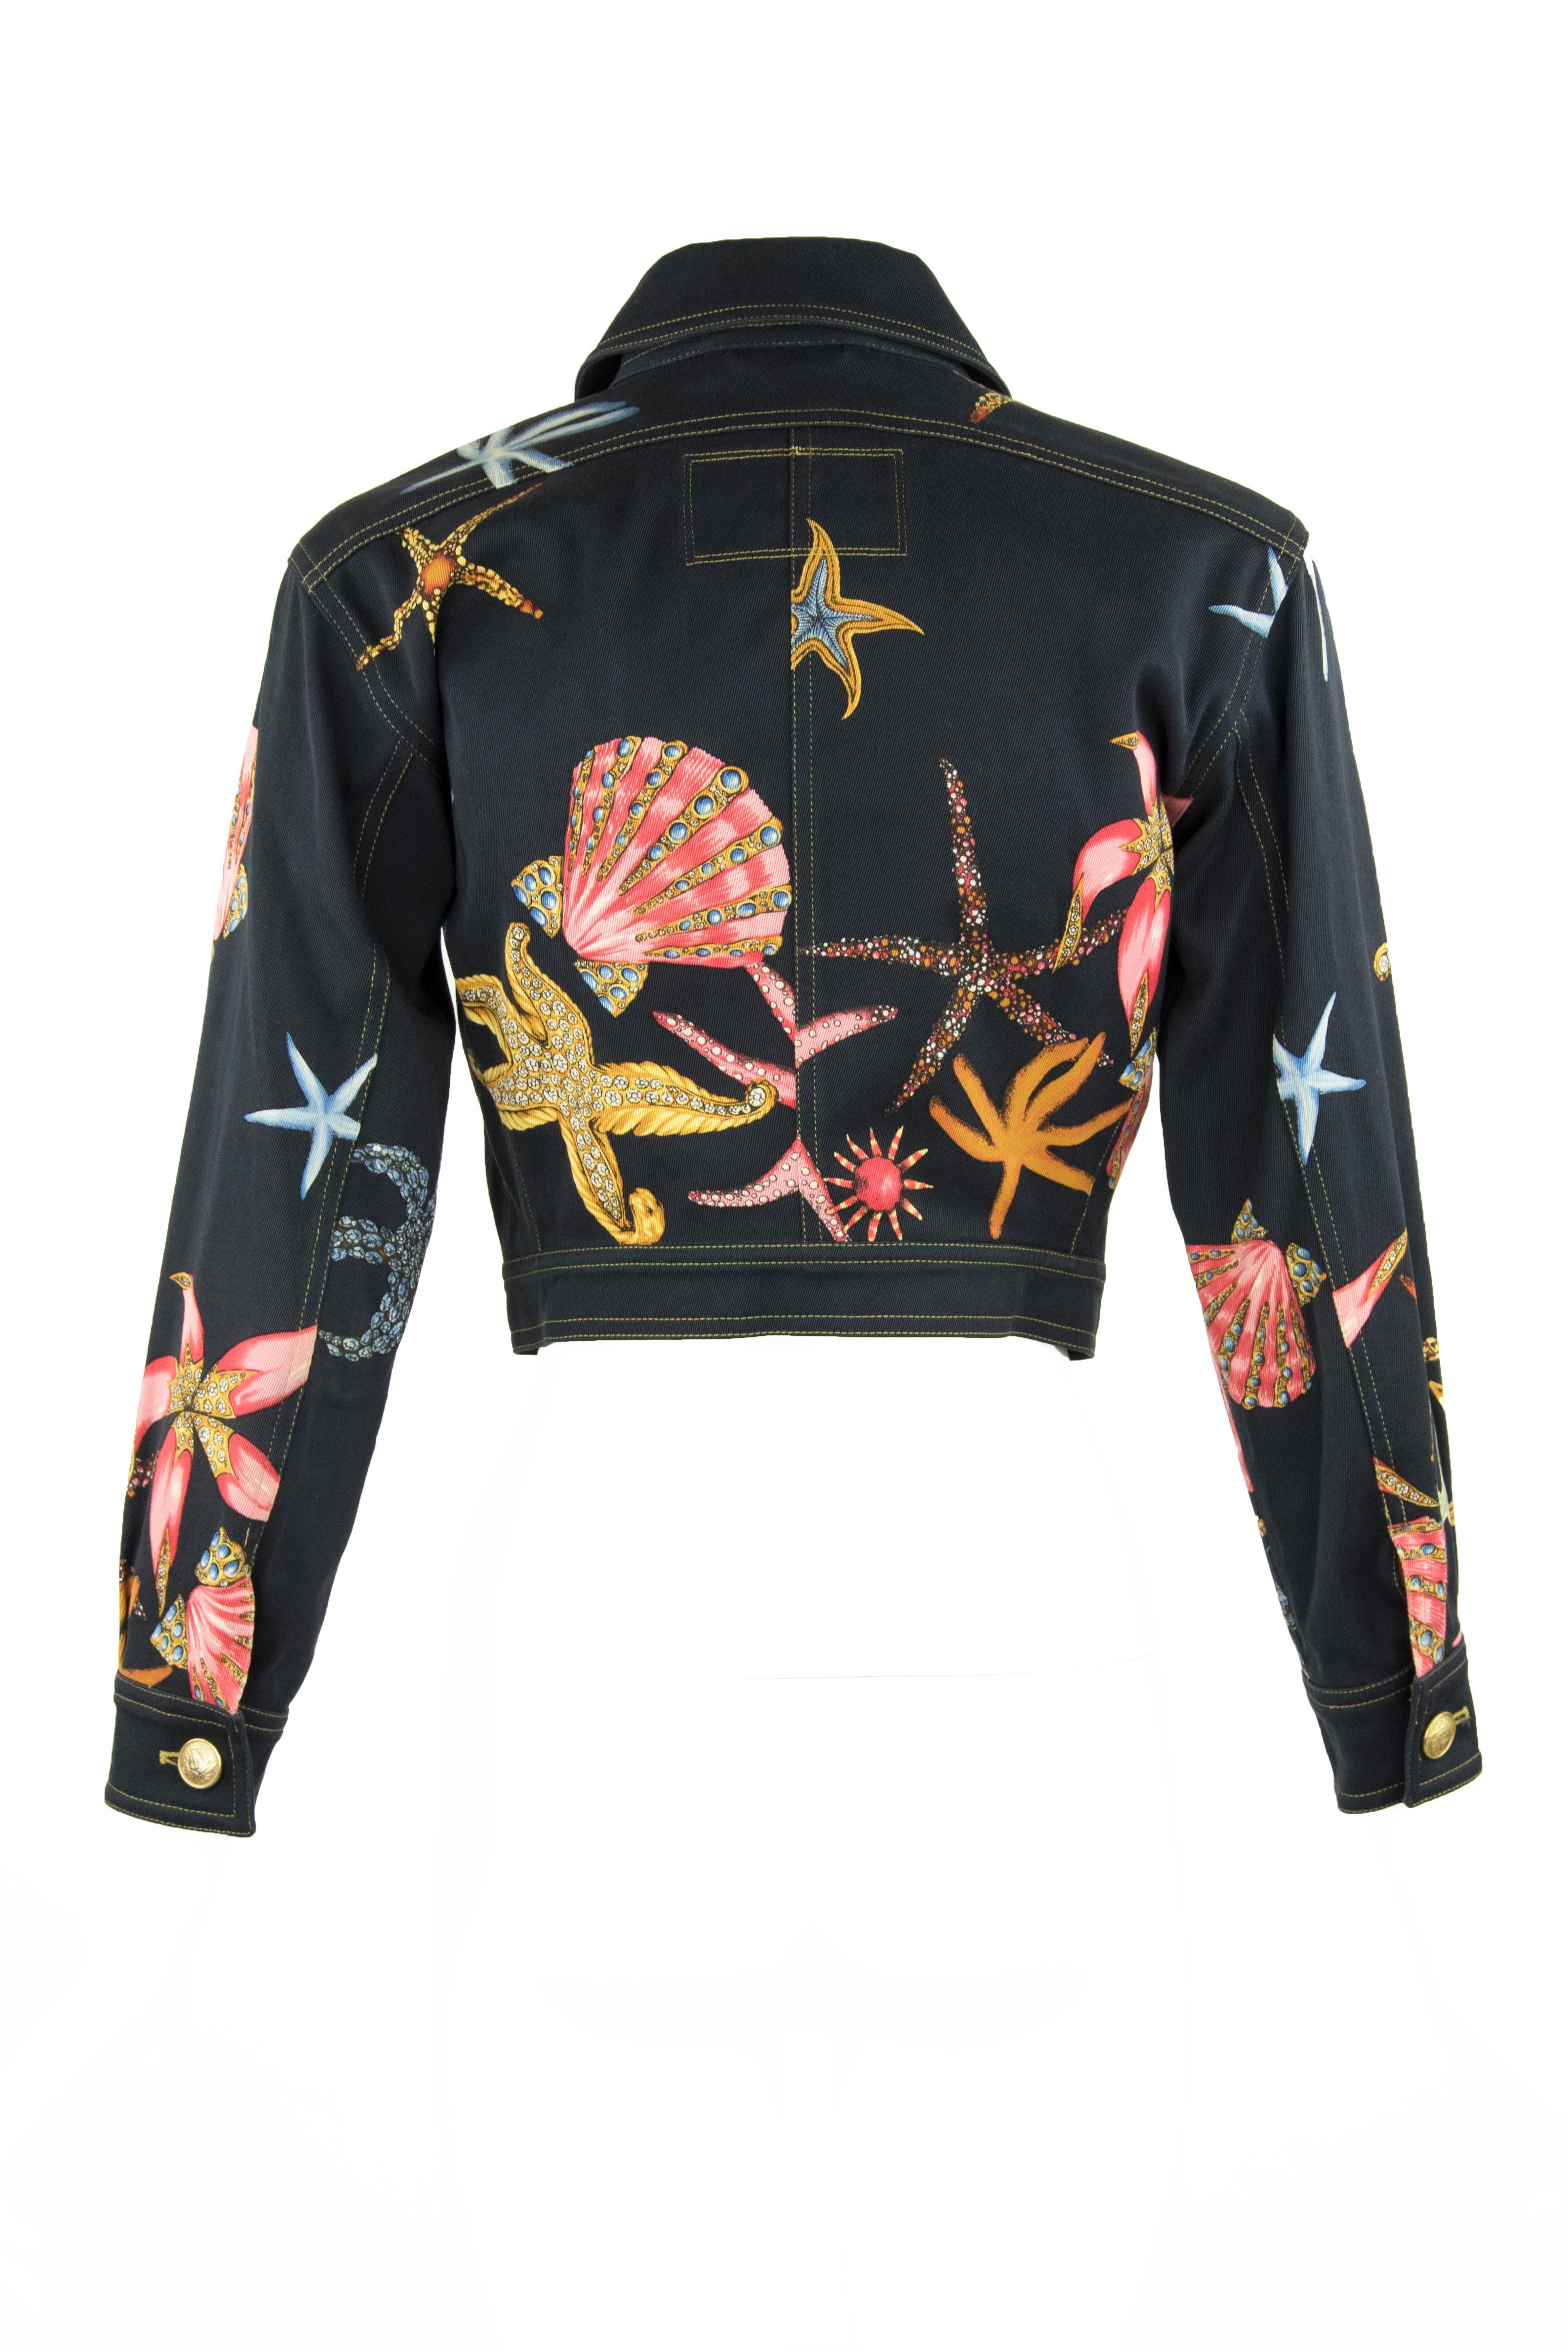 Black Vintage Gianni Versace Starfish Jacket - Size XS/S For Sale